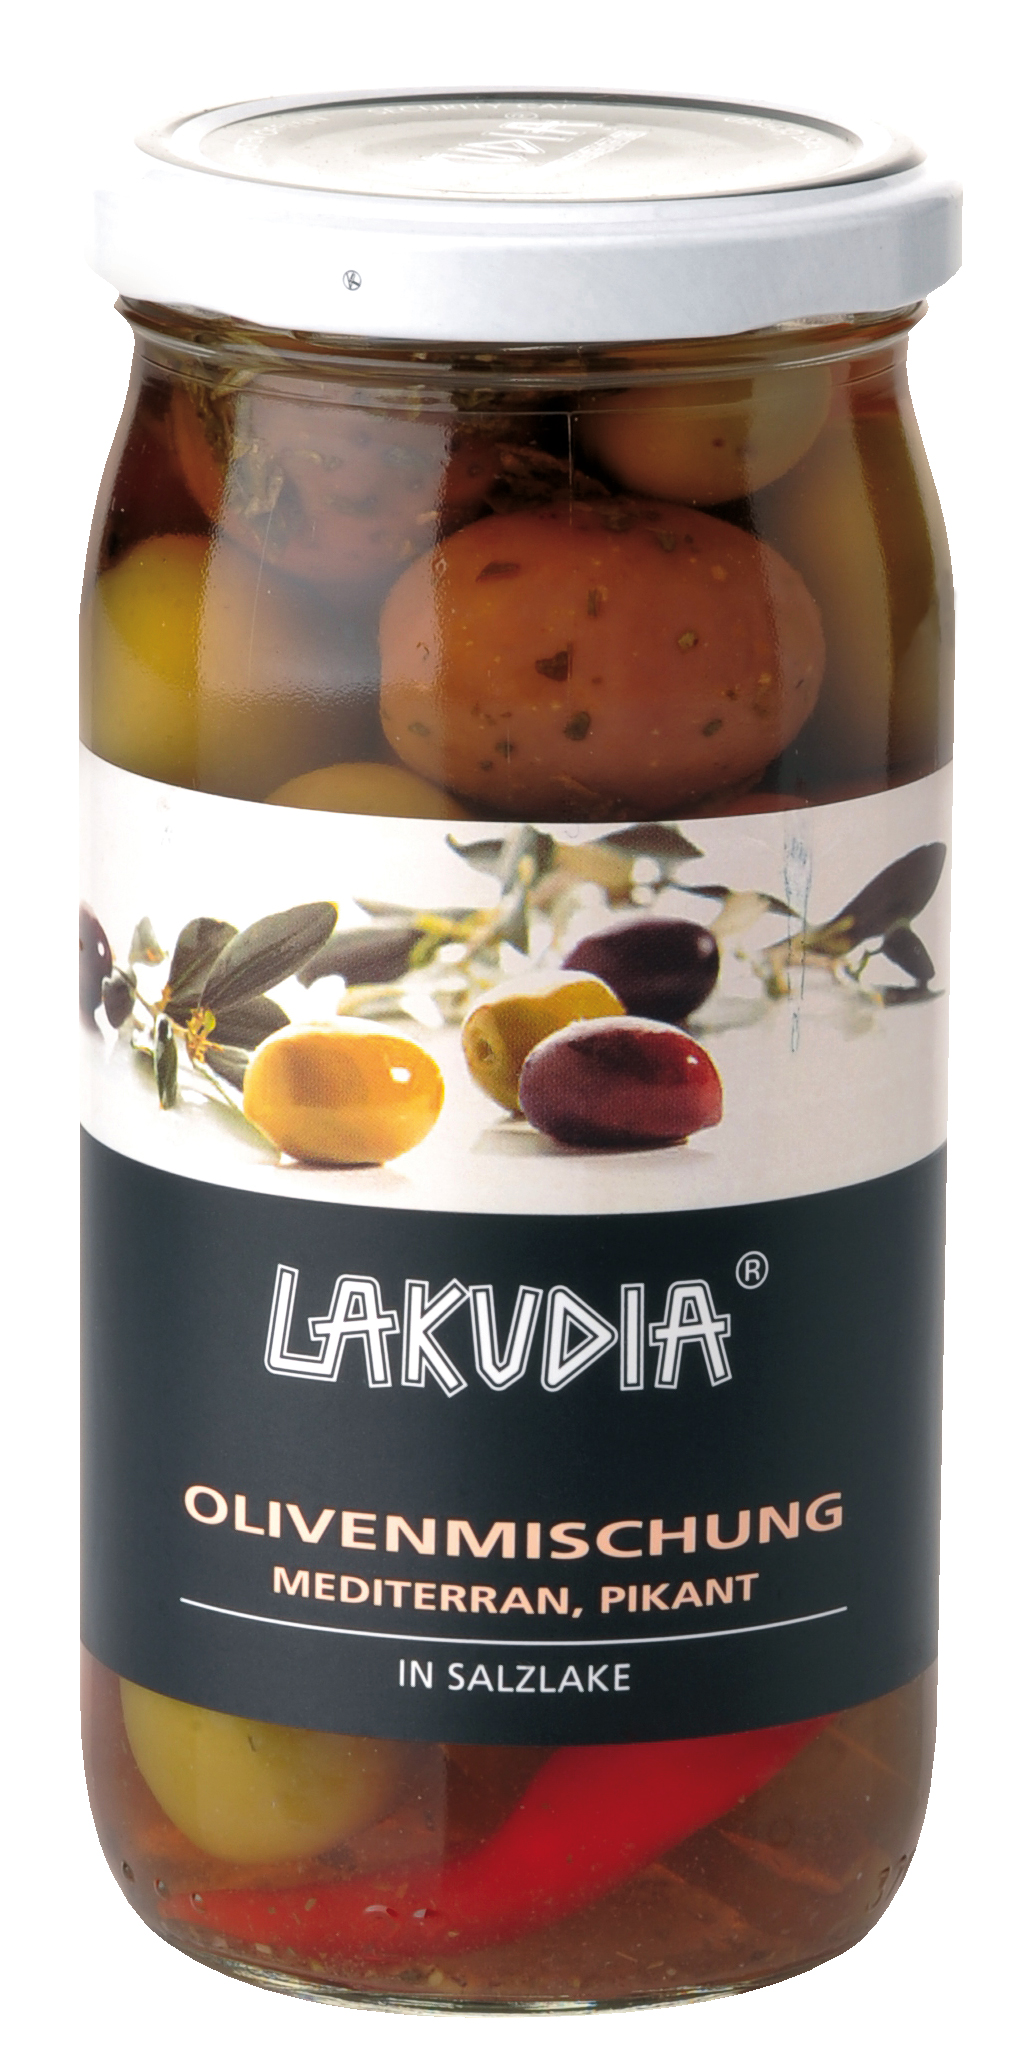 Olivenmischung mediterran, pikant